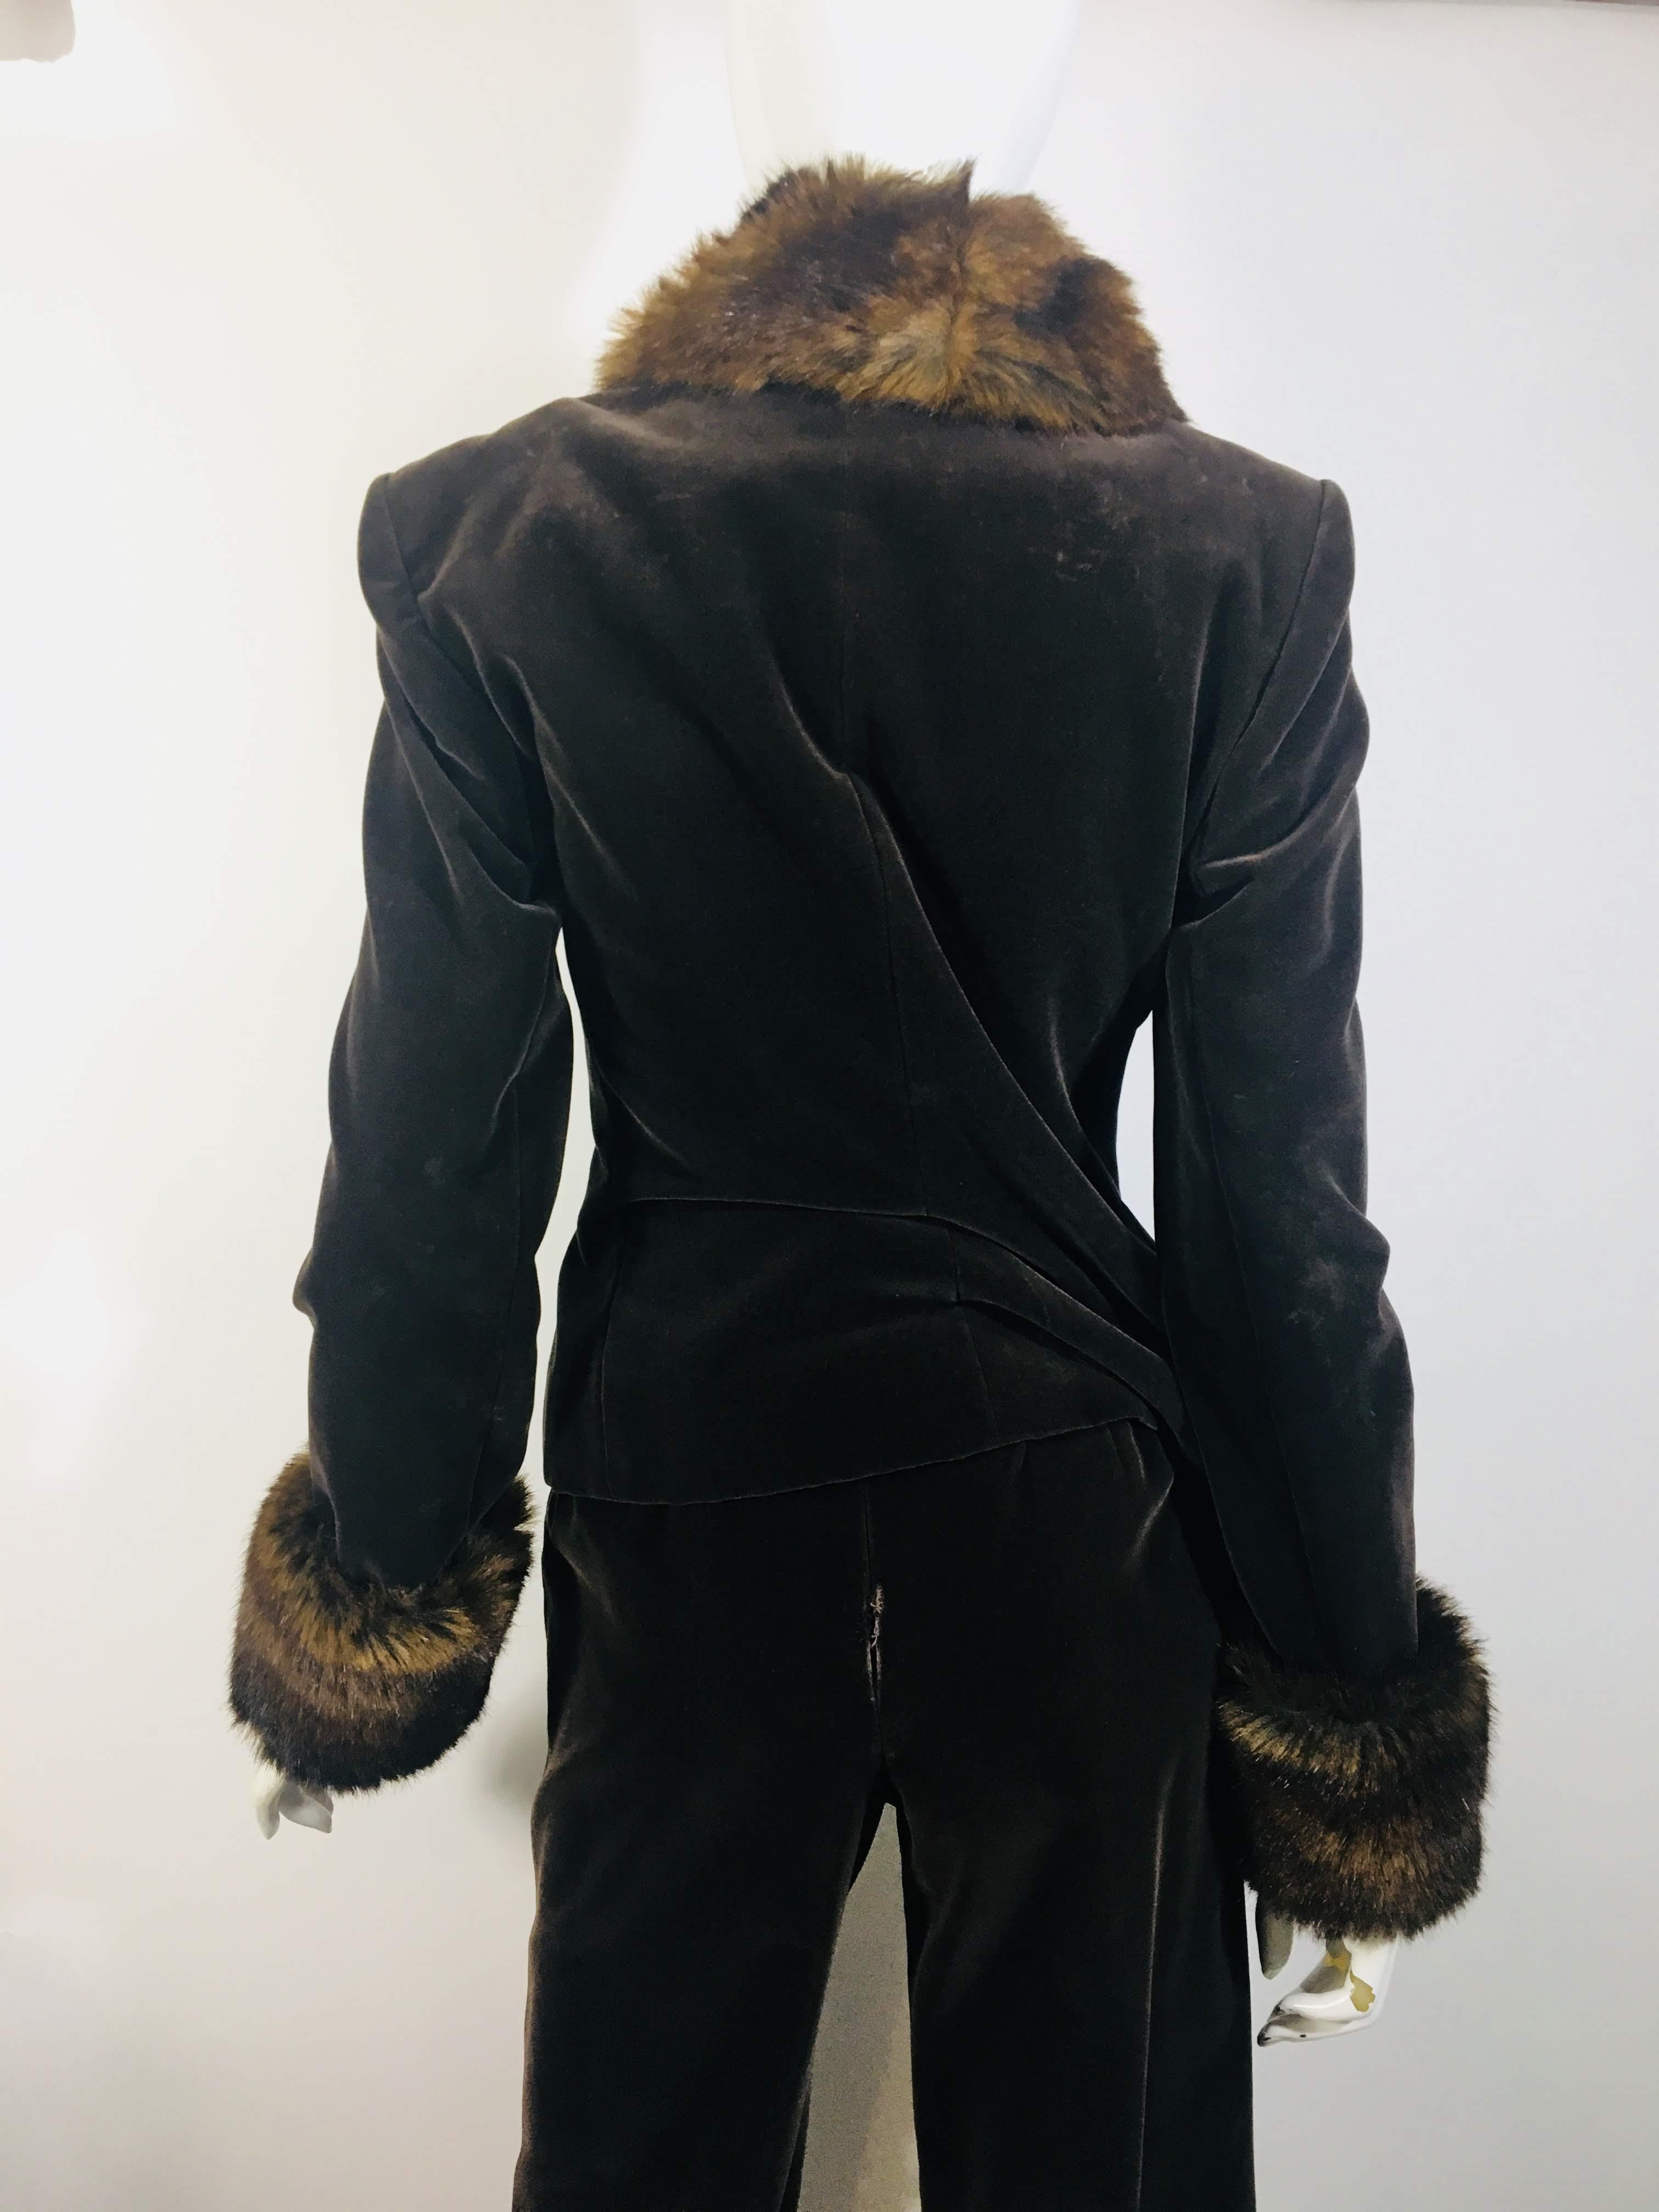 Carolina Herrera Pant Suit with Fur Trim 3